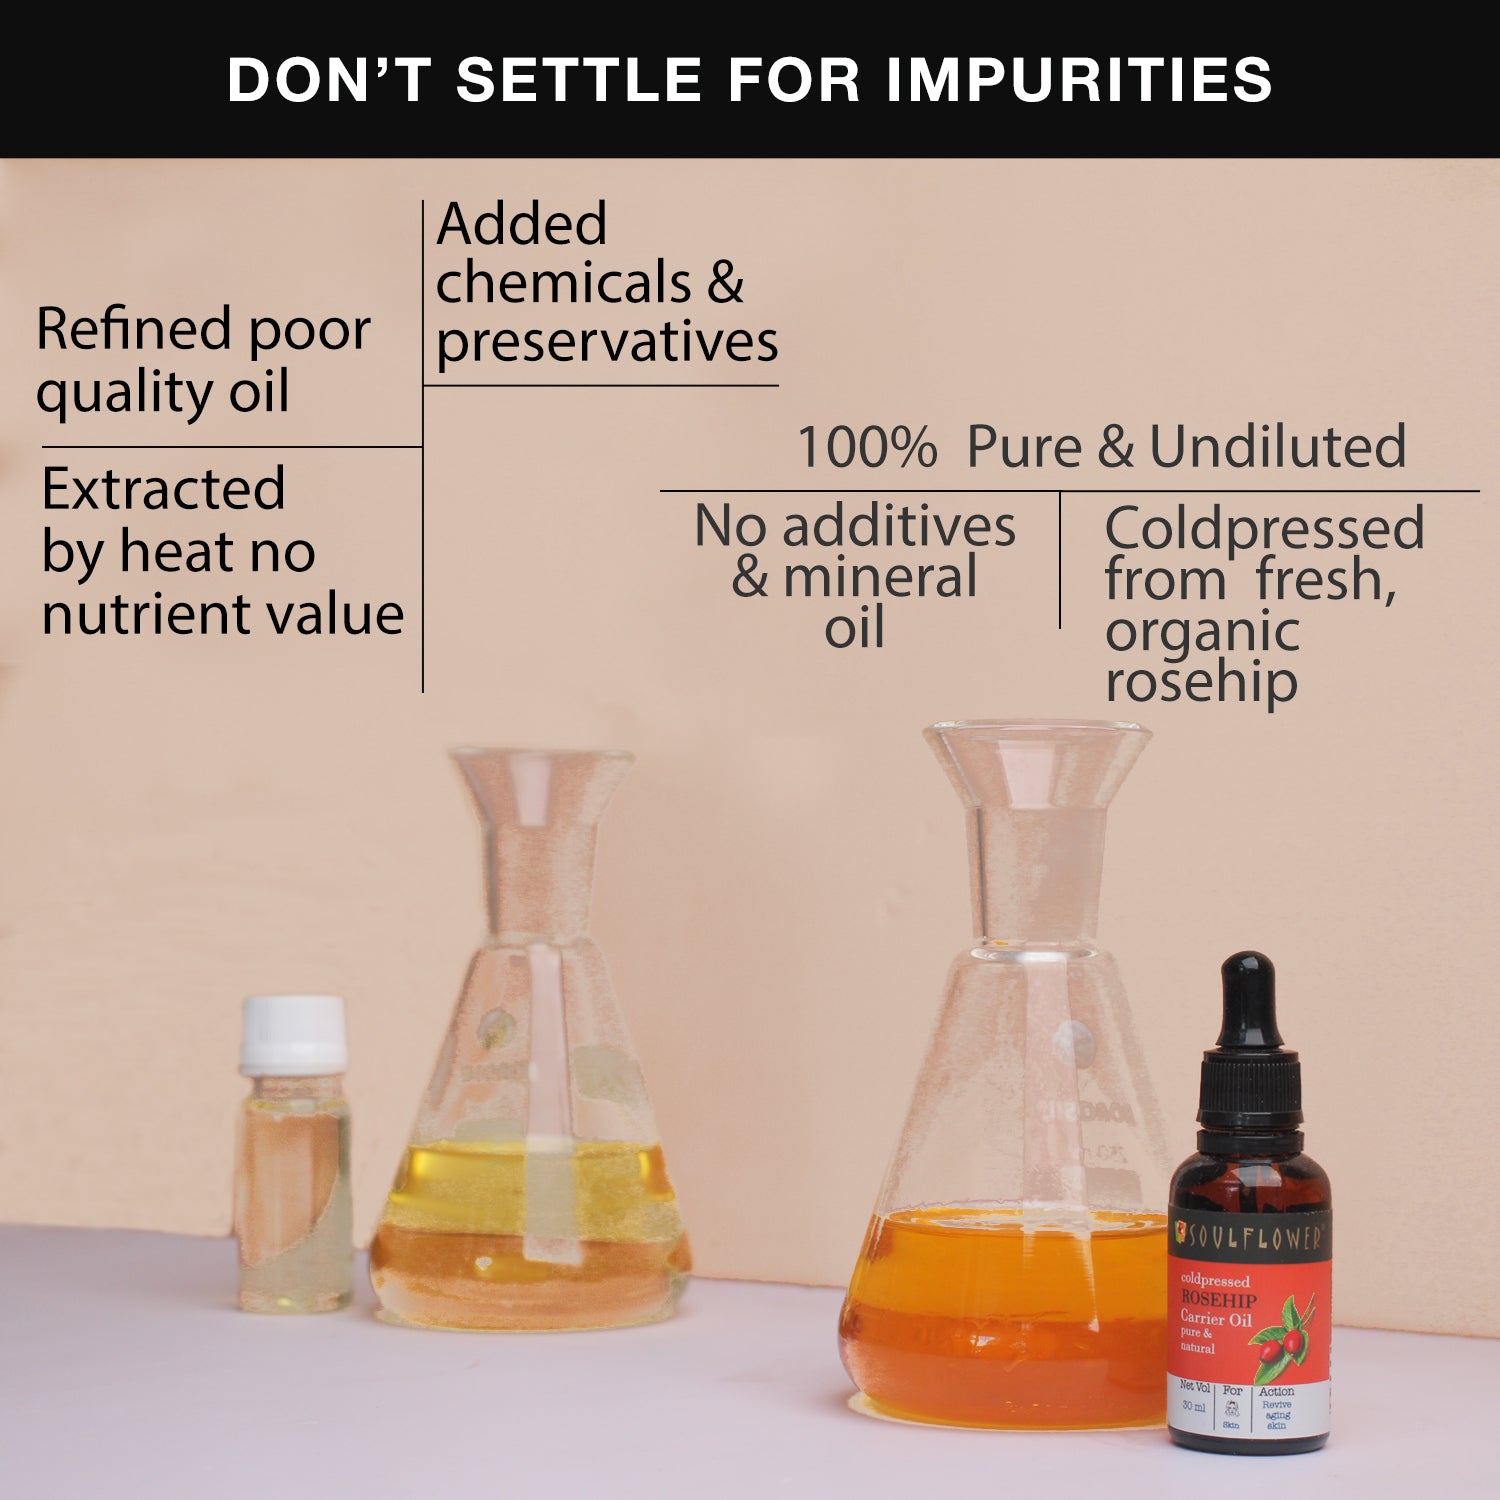 Impurities of other oils